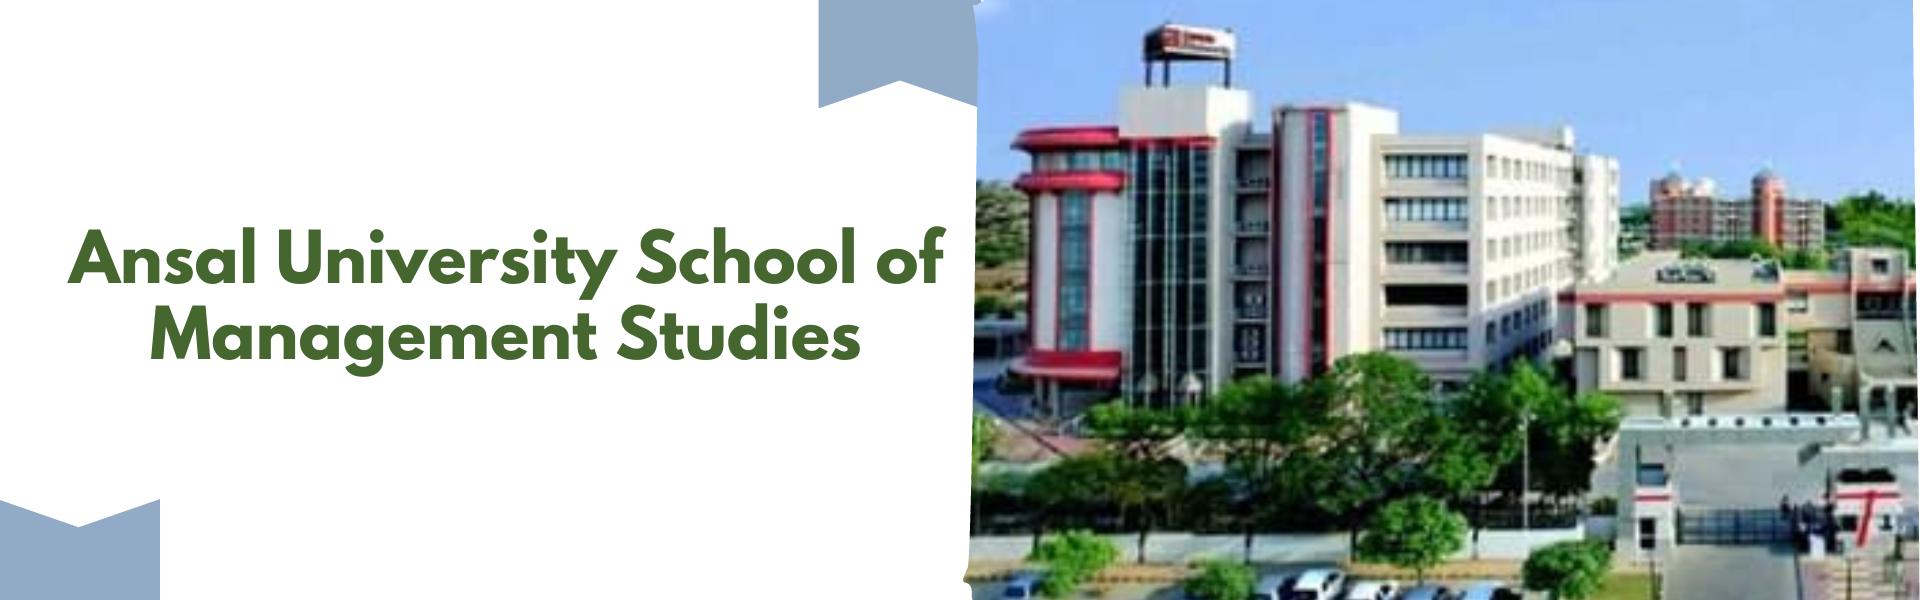 Ansal University School of Management Studies